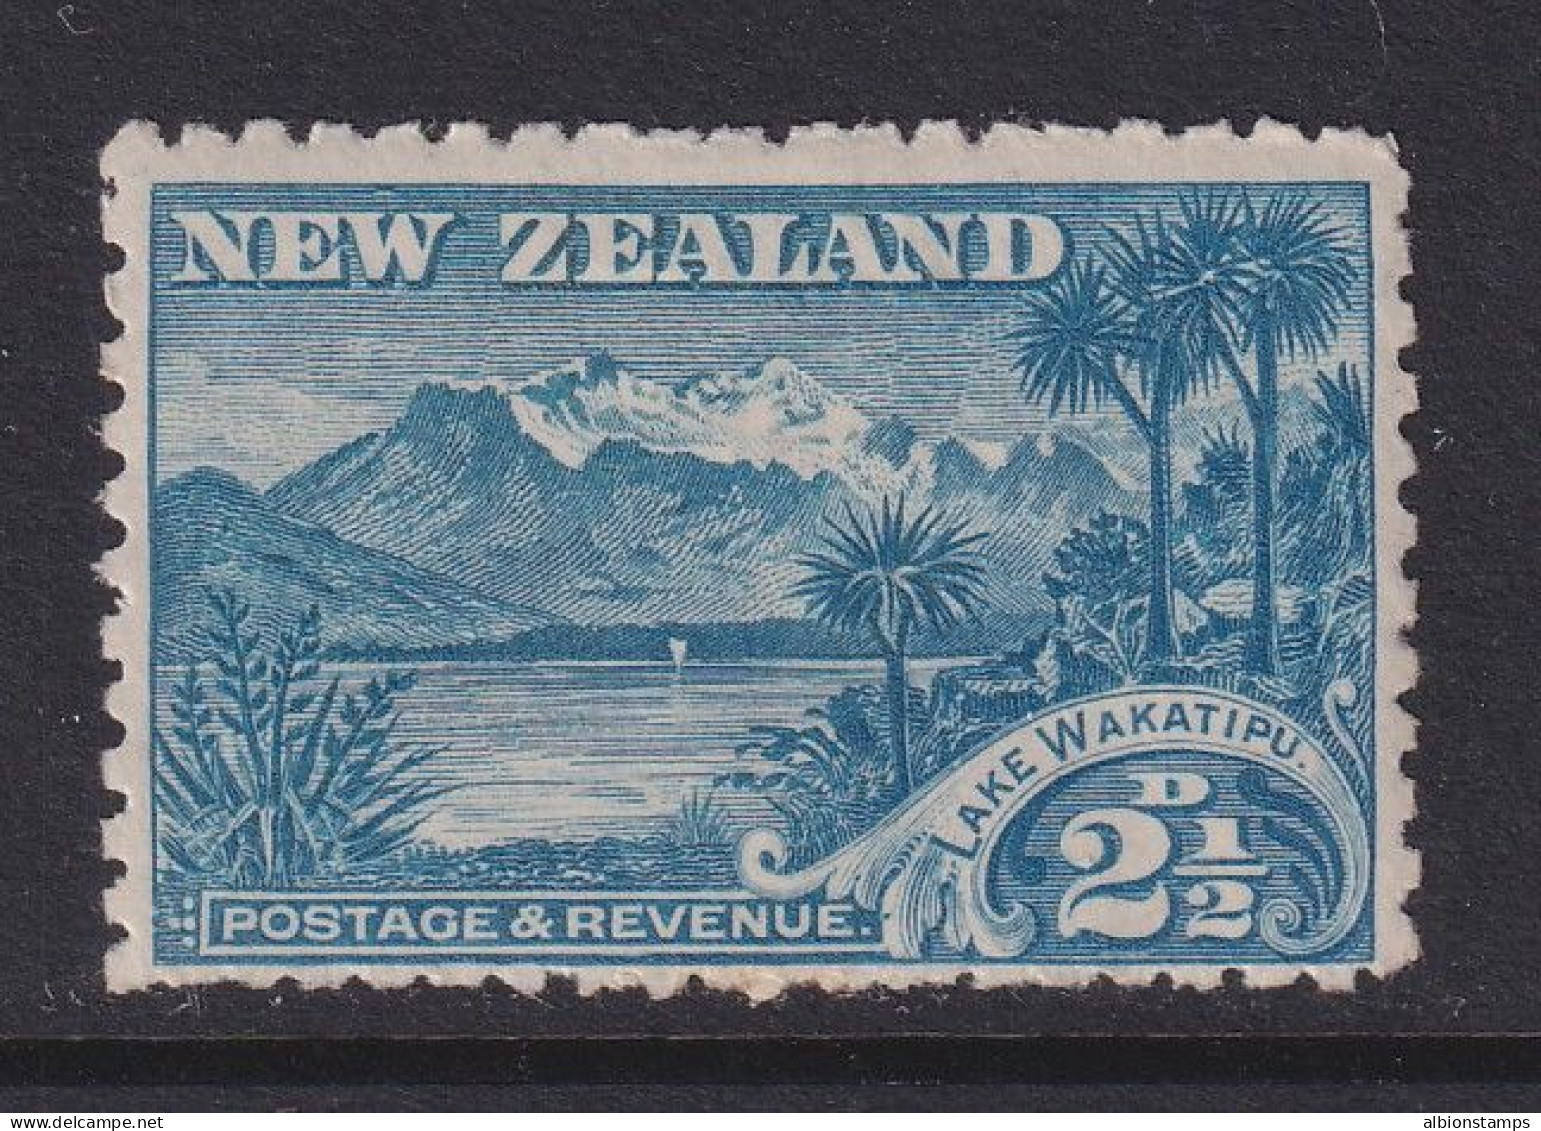 New Zealand, Scott 88 (SG 260), MLH - Nuevos